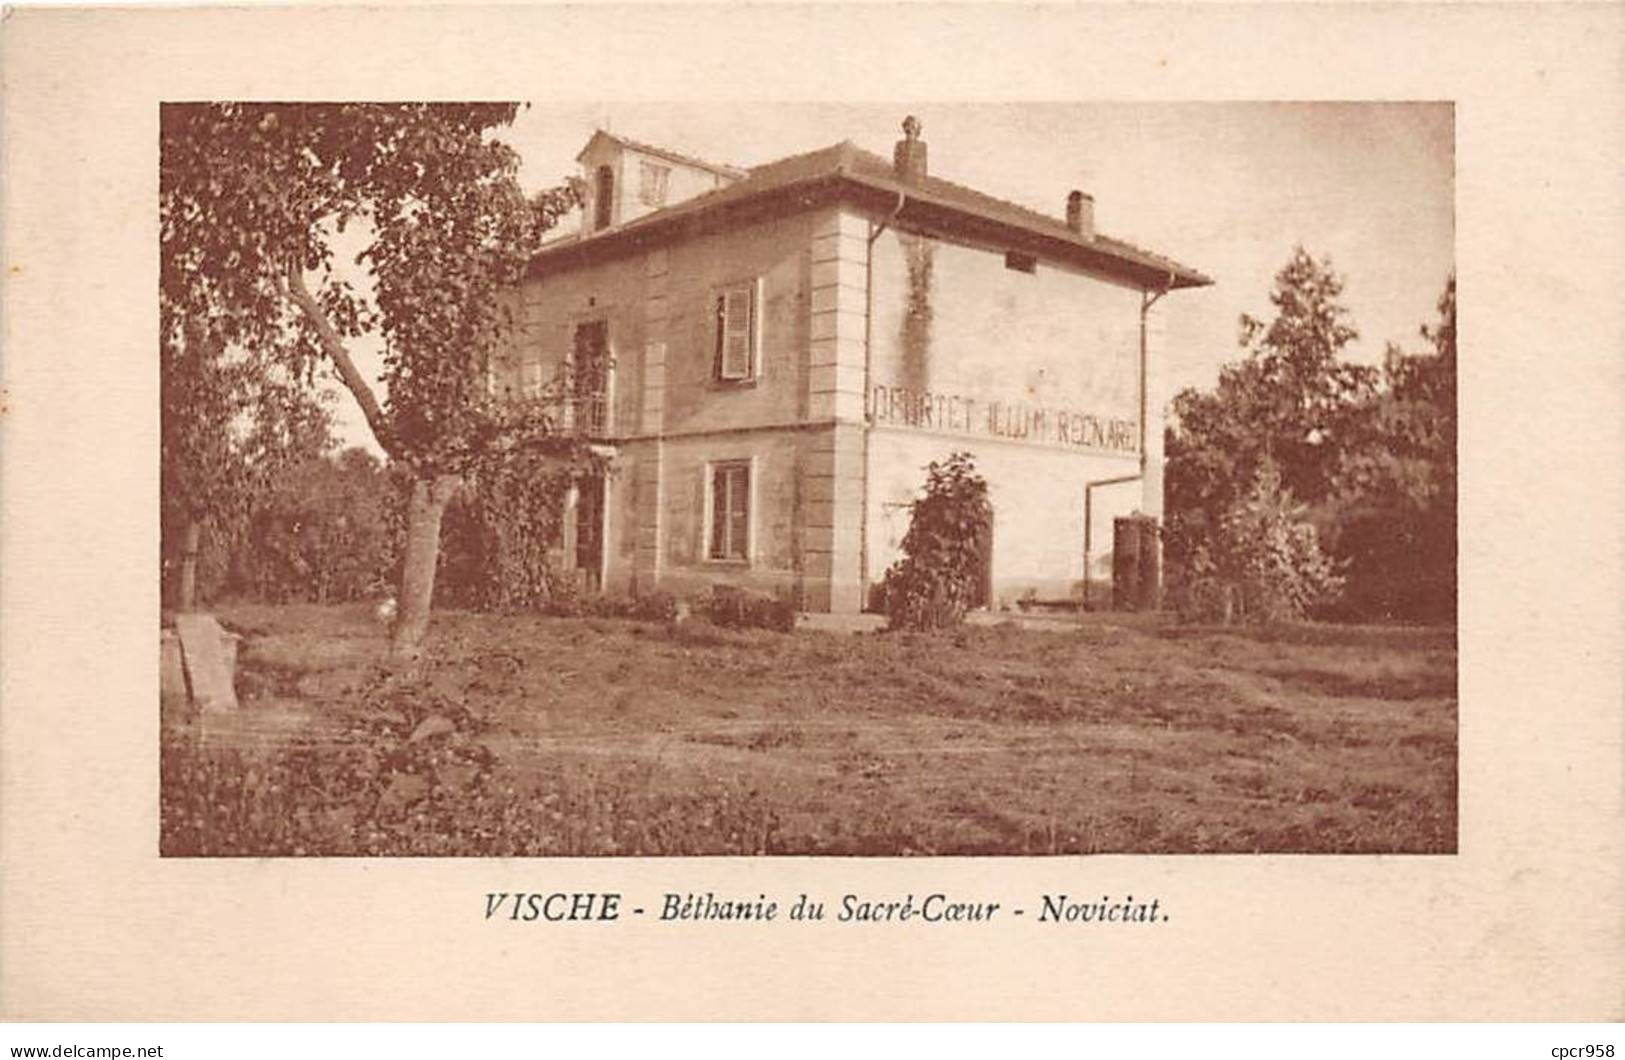 Italie - N°77181 - TORINO - VISCHE - Béthanie Du Sacré-Coeur - Noviciat - Andere Monumente & Gebäude